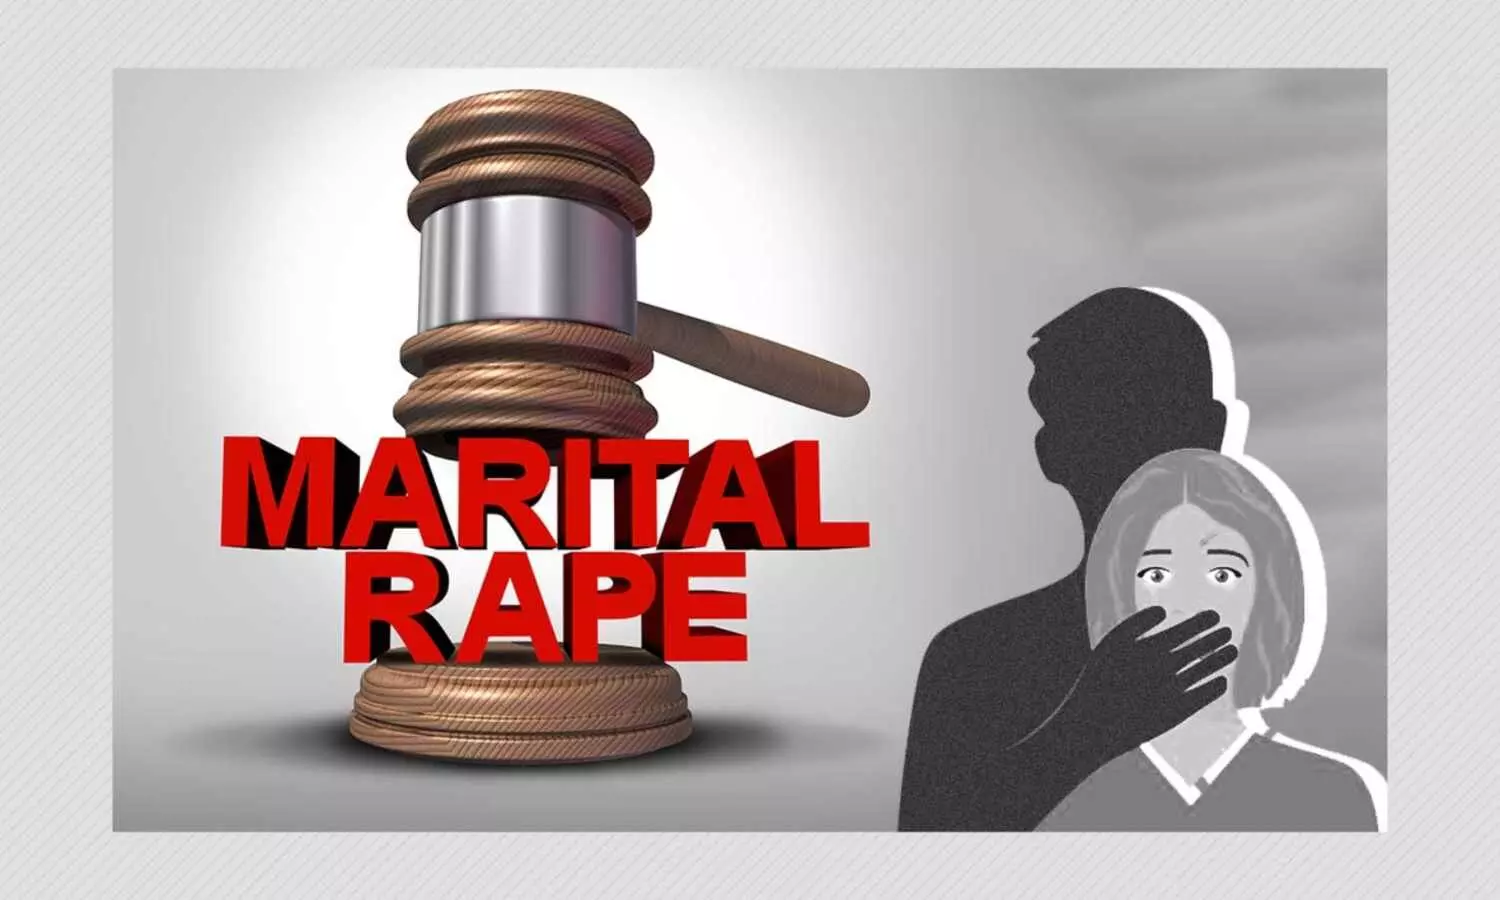 supreme court will hear the marital rape case next week